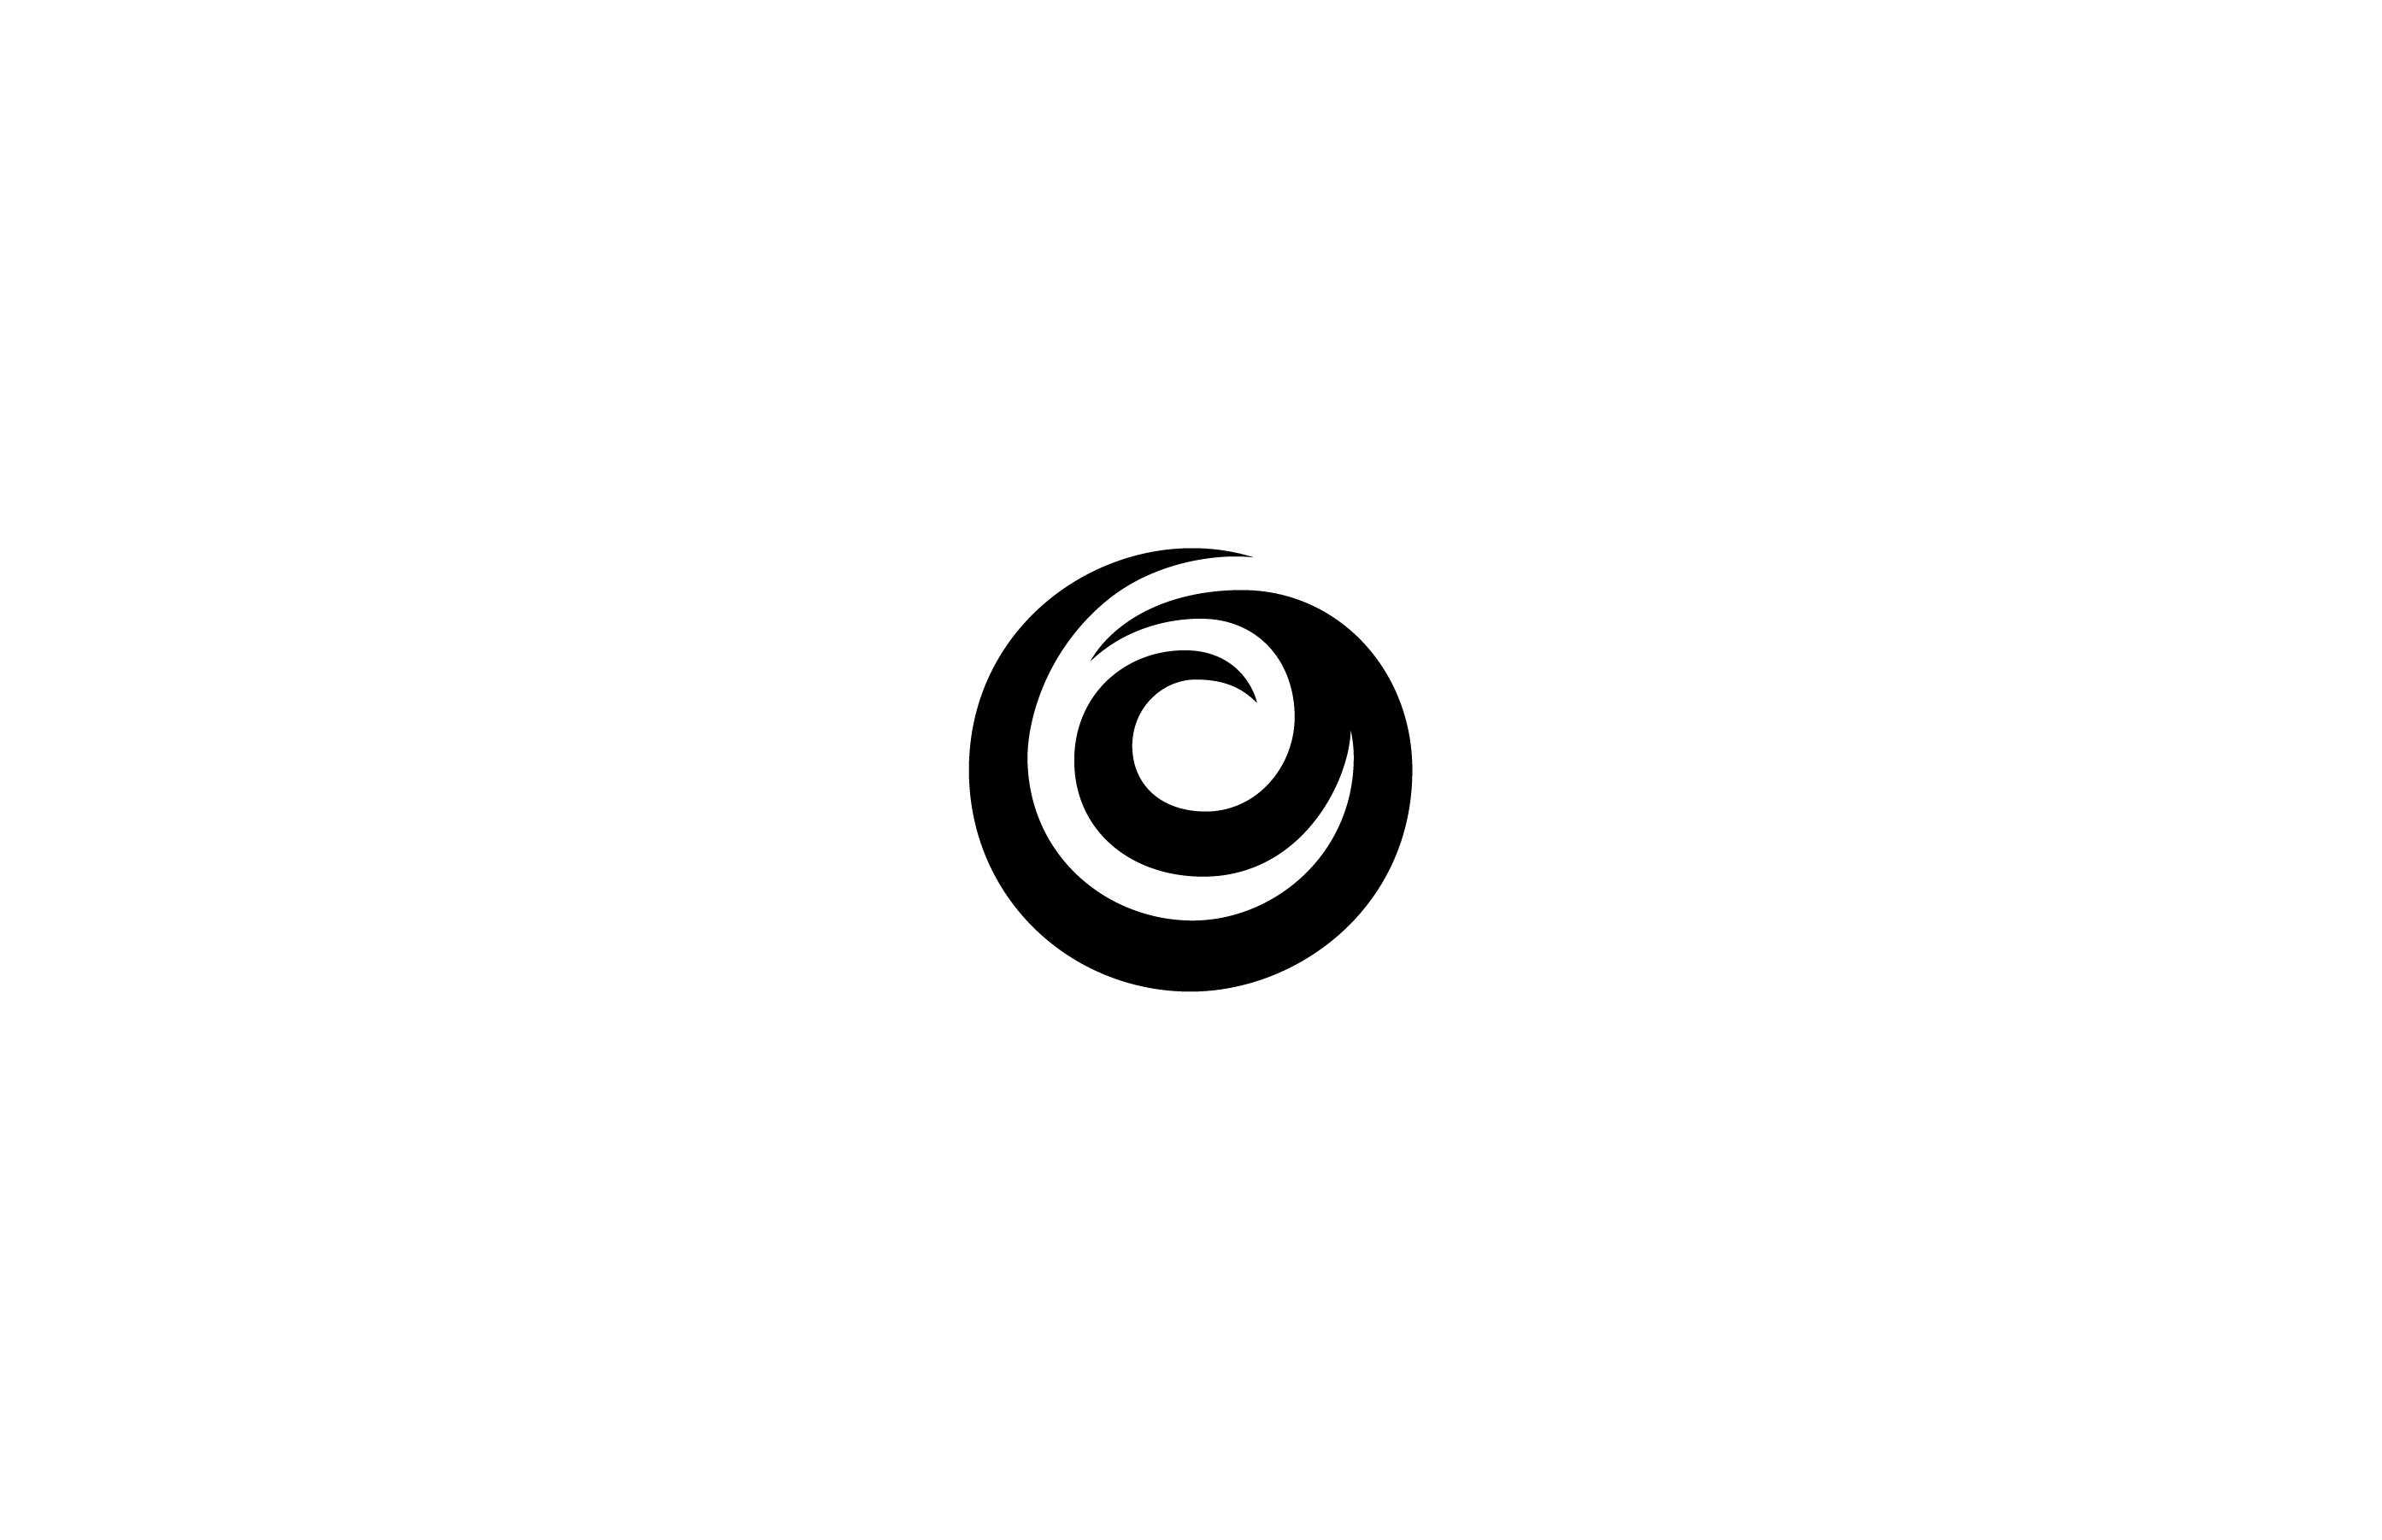 letter c swirl twist negative space classic logo design mark symbol timeless